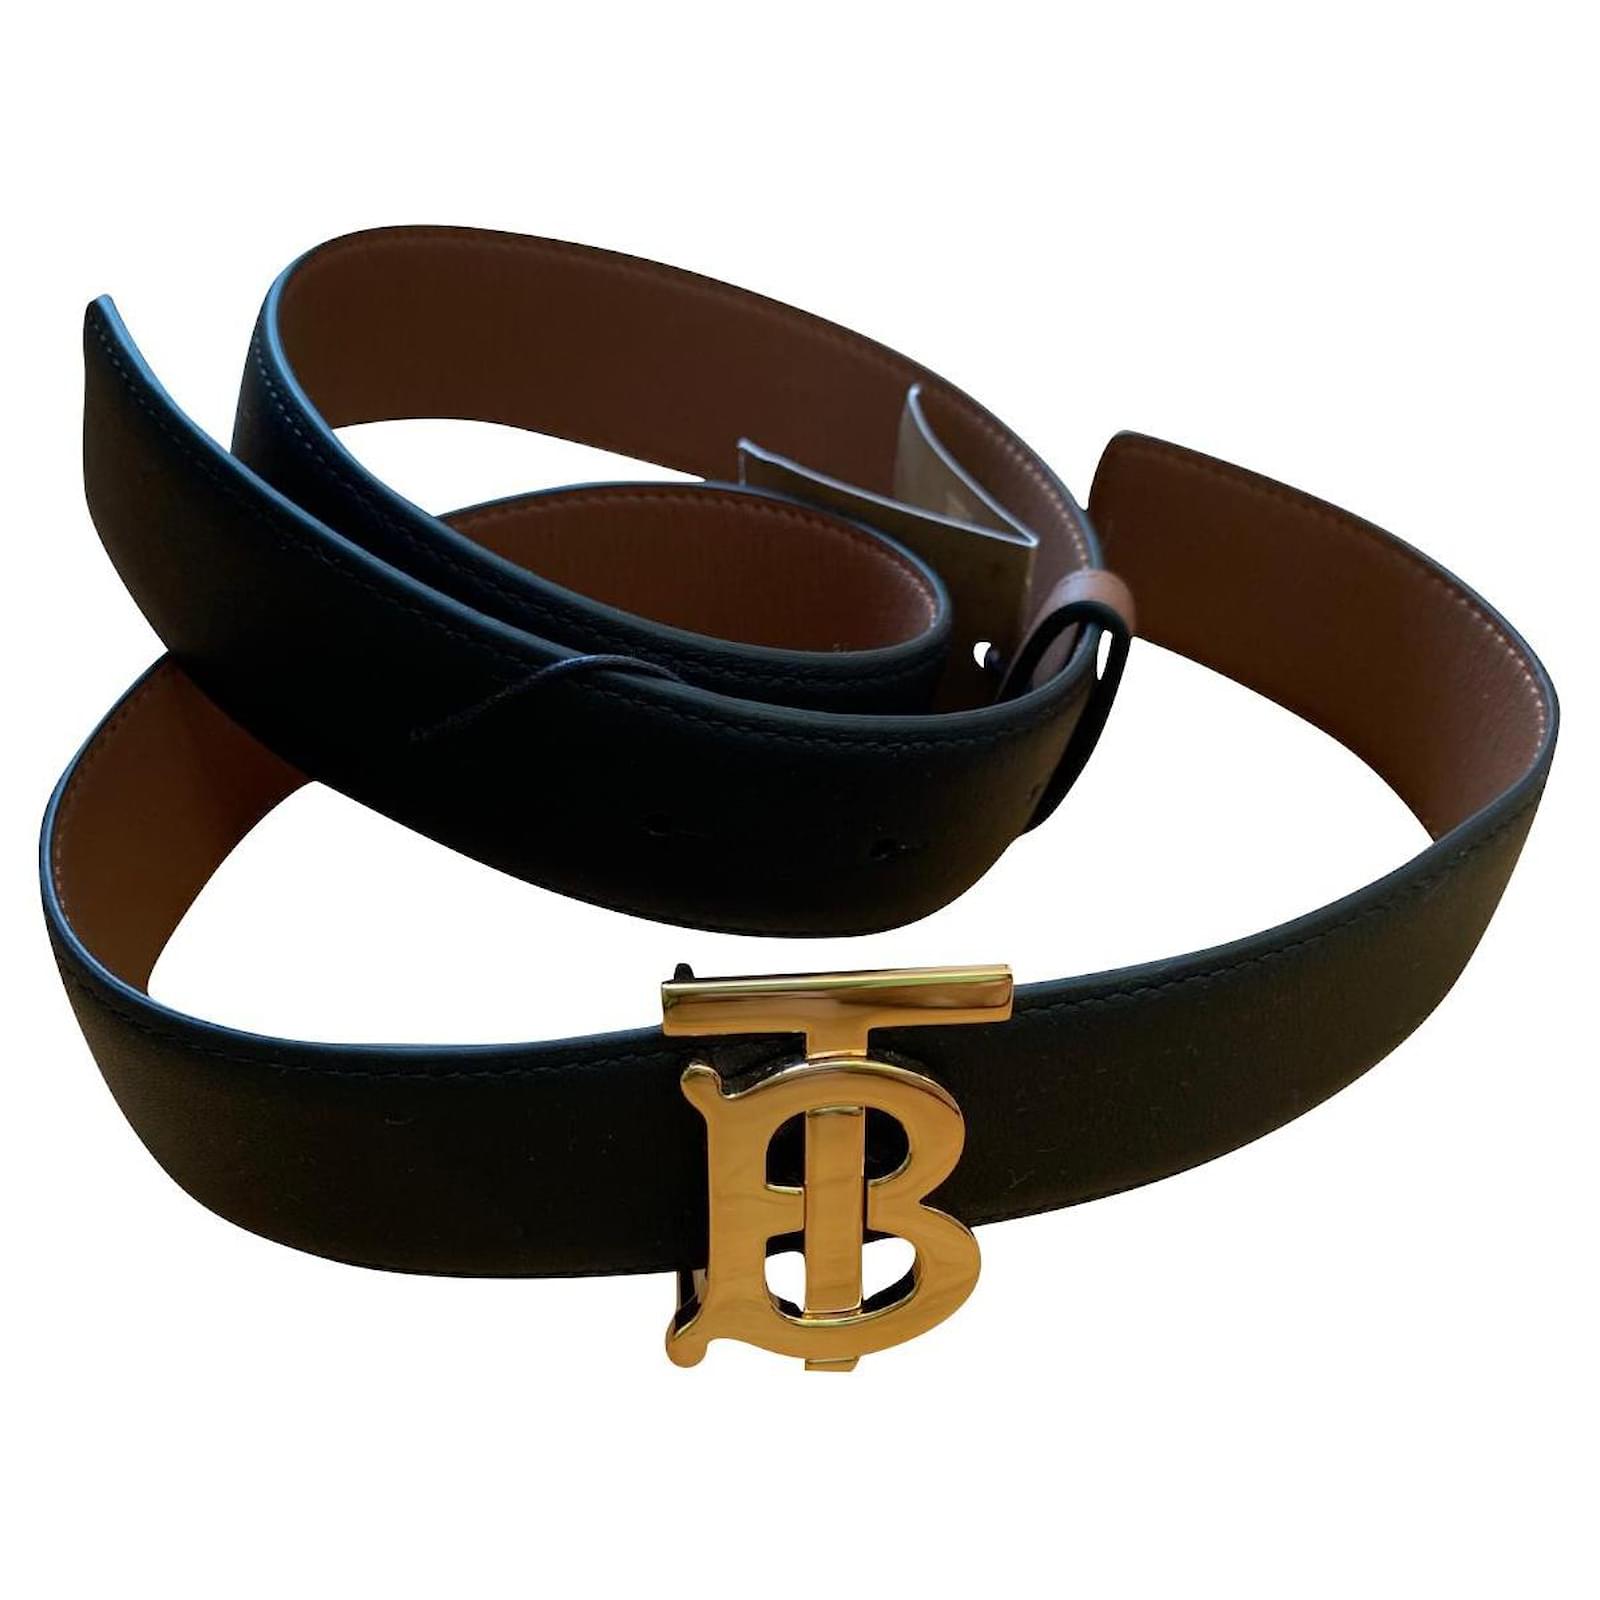 Burberry, Accessories, Authentic Burberry Mens Gold Buckle Belt Original  Plaid